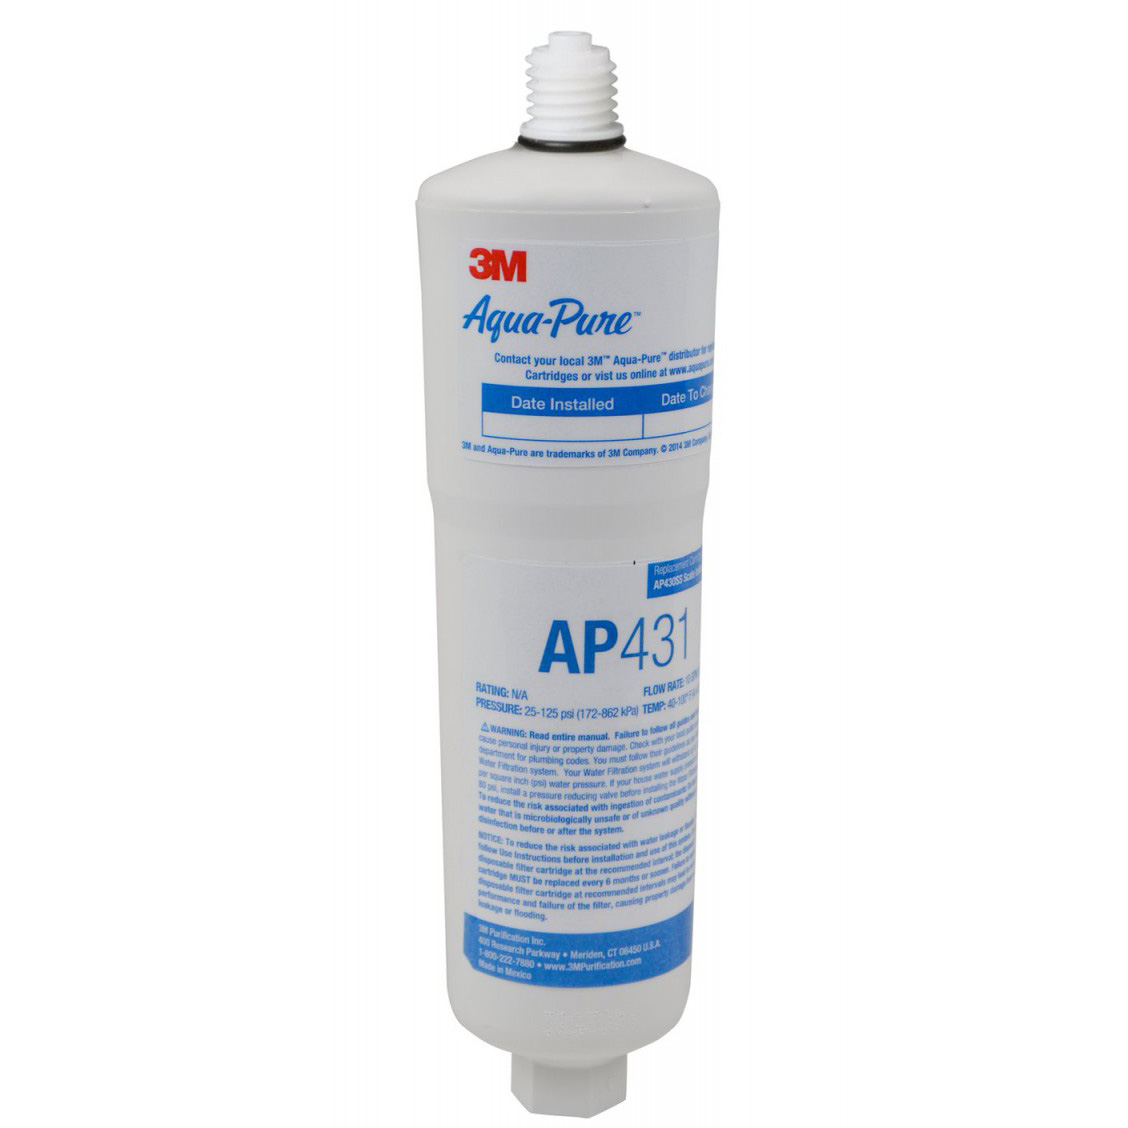 3M Aqua-Pure Replacement Water Treatment Cartridge